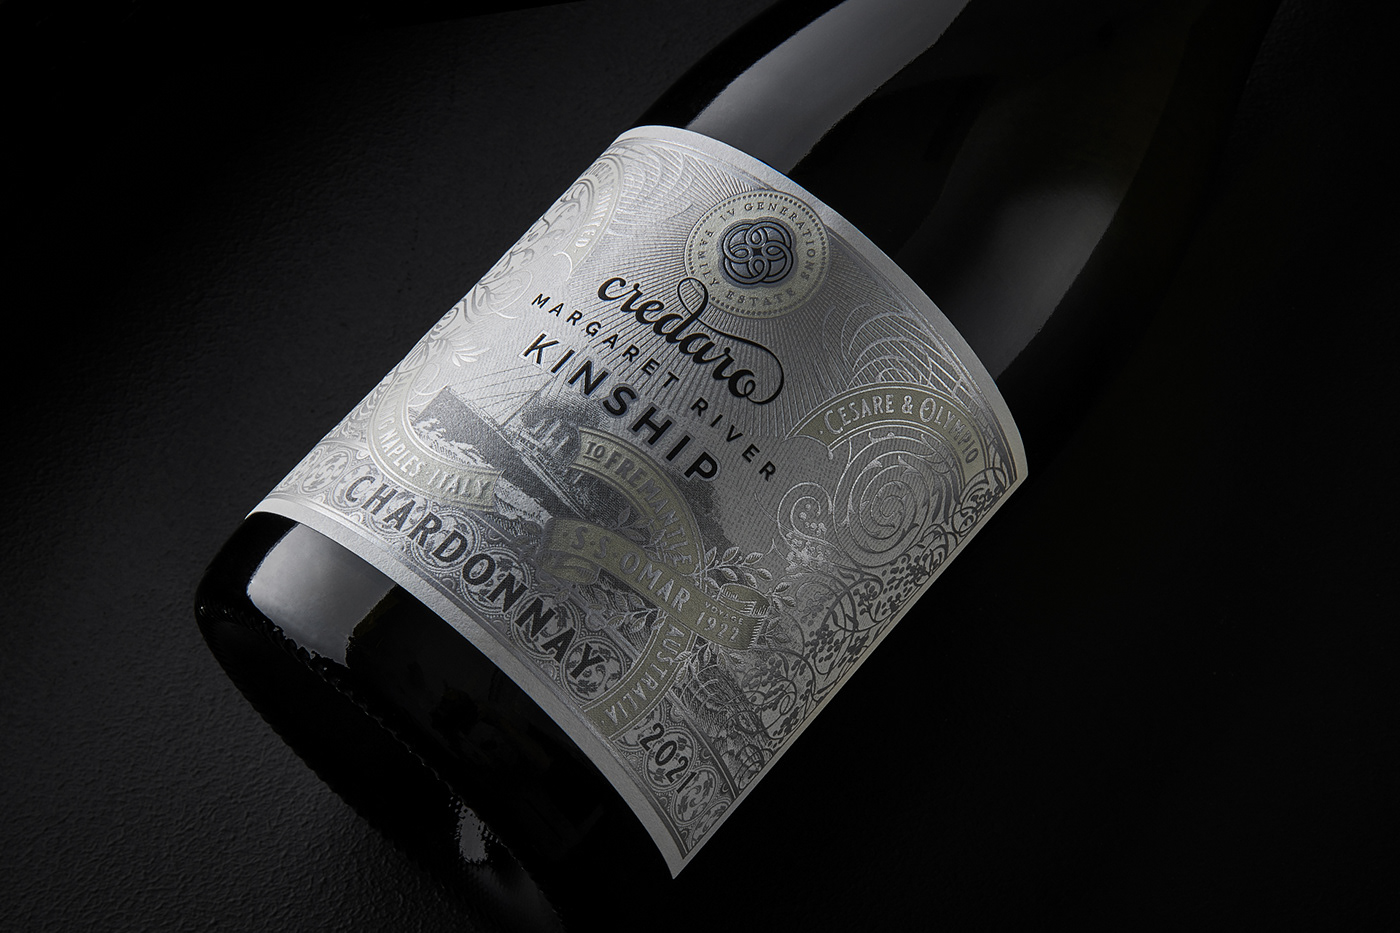 australian wine bottle Harcus harcus design kinship wine Label label design Packaging wine wine label